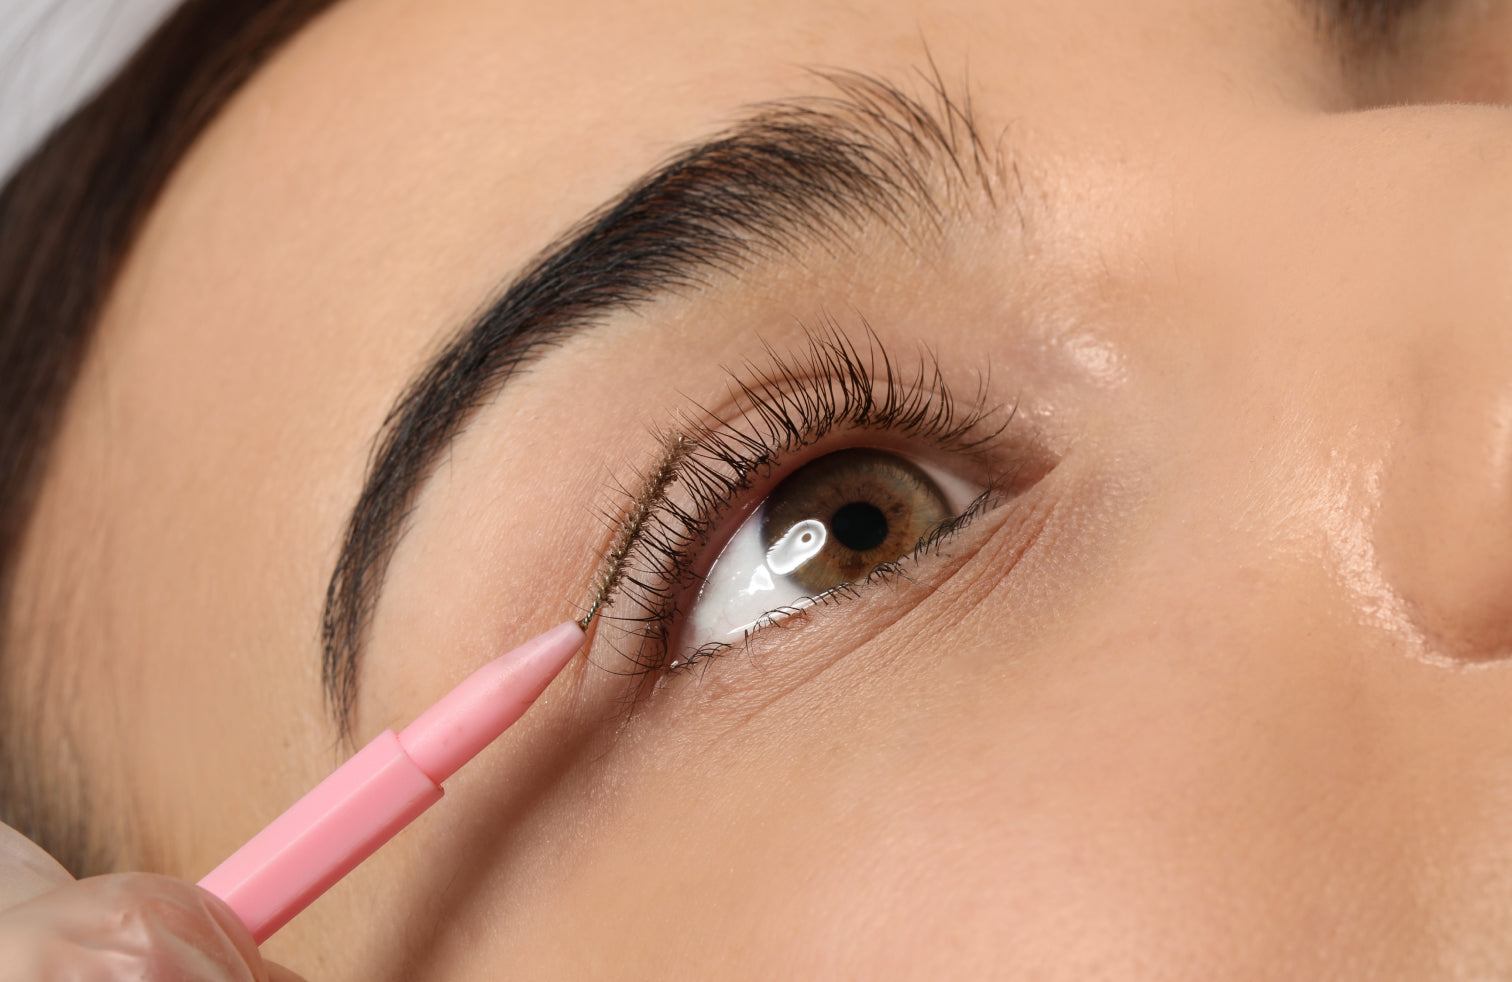 Eyelash Extensions vs. Mascara: Pros and Cons